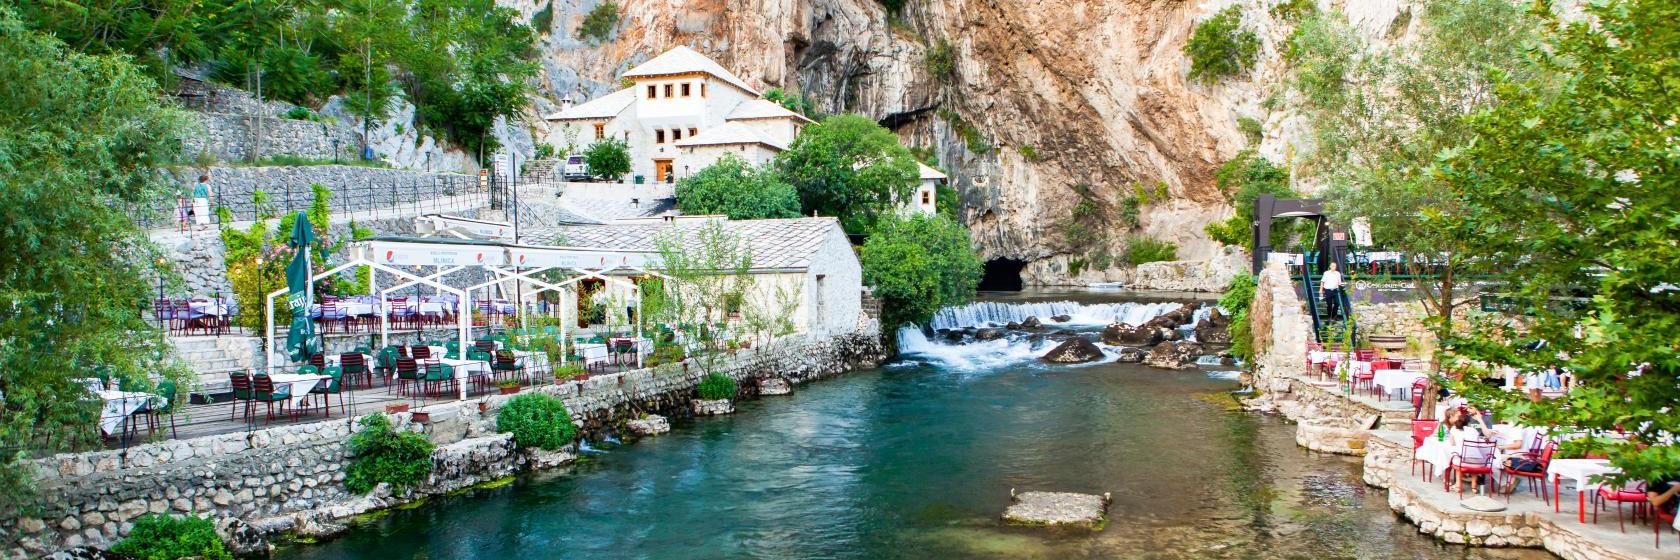 Best Buna Hotels, Bosnia and Herzegovina (From $42)